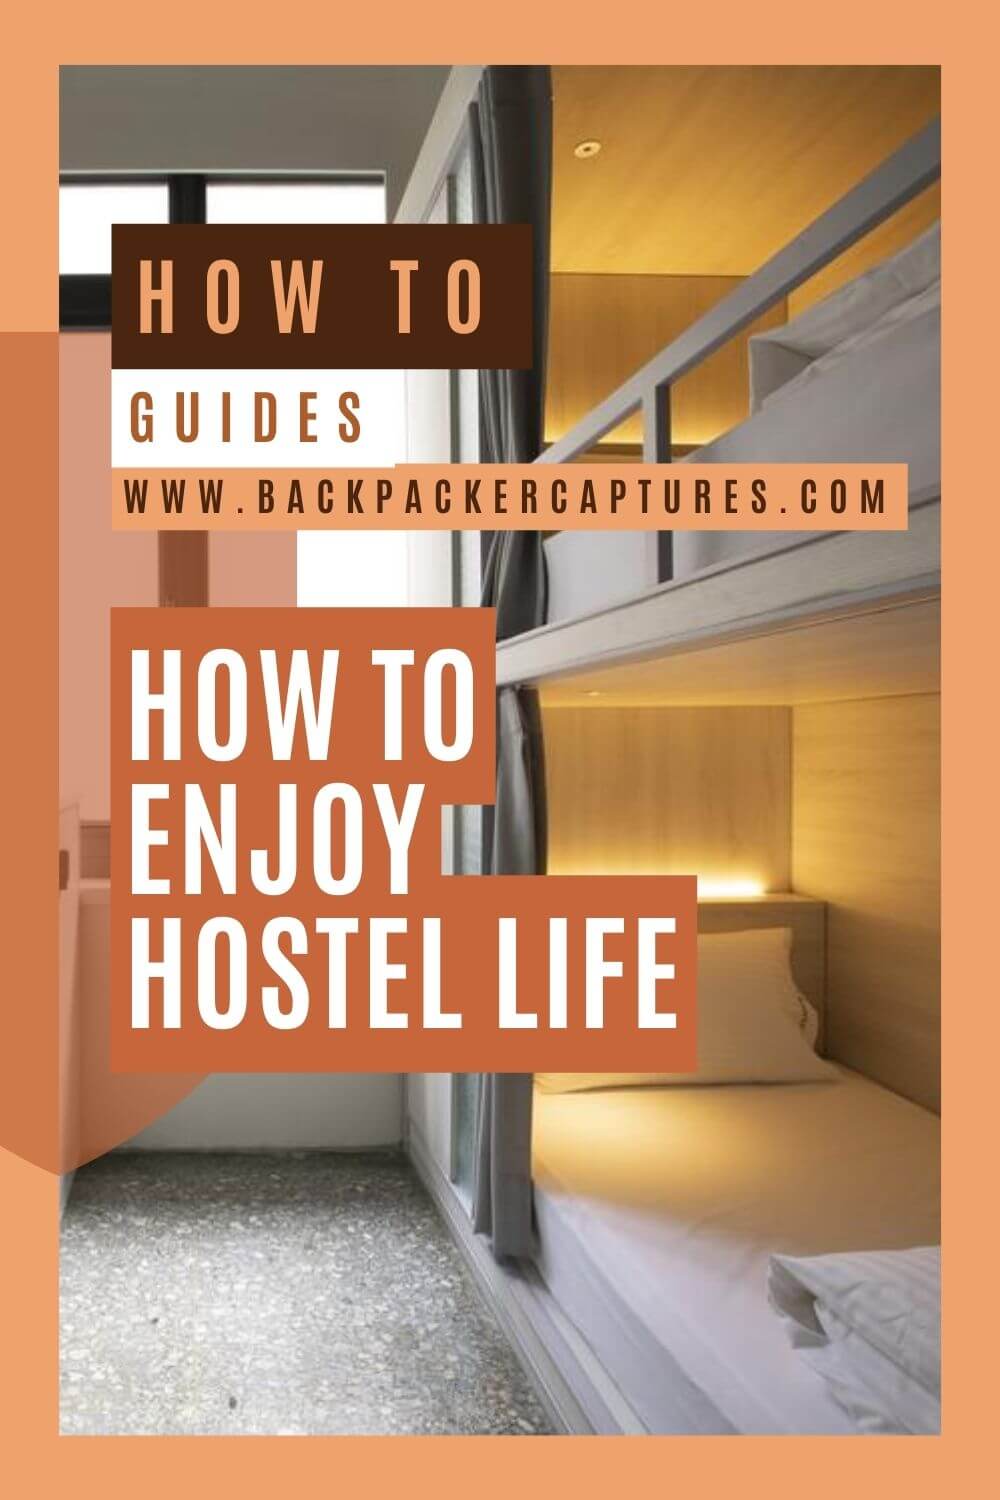 How to Enjoy Hostel Life